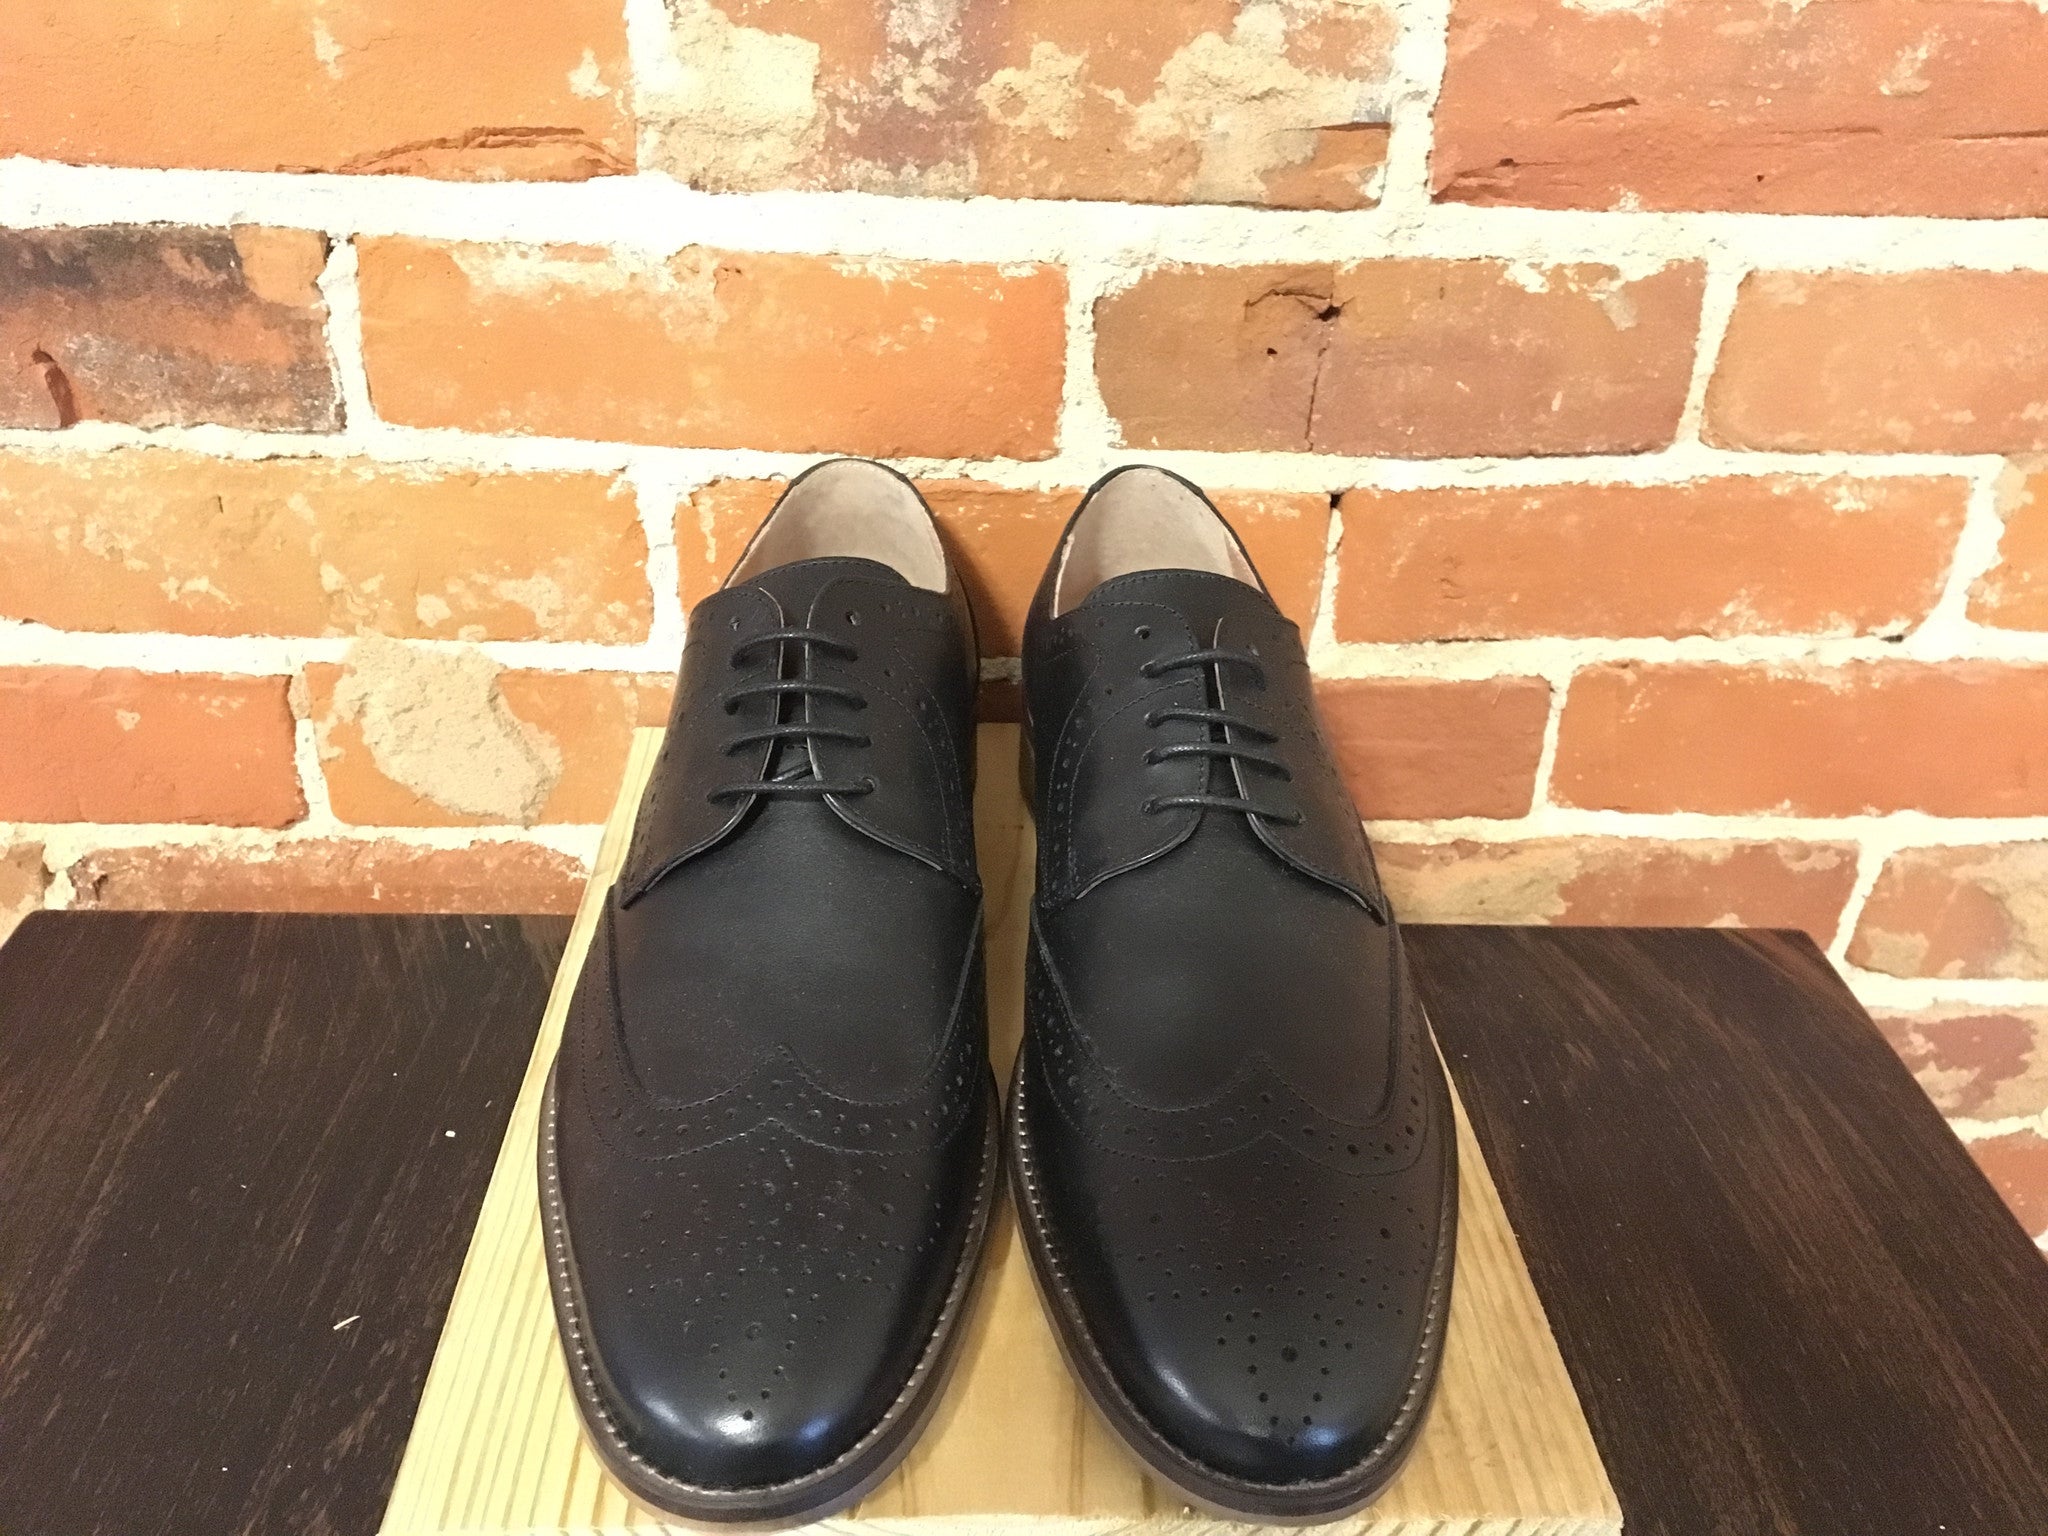 PARC City Five-Eye Wingtip Shoe in Black Leather